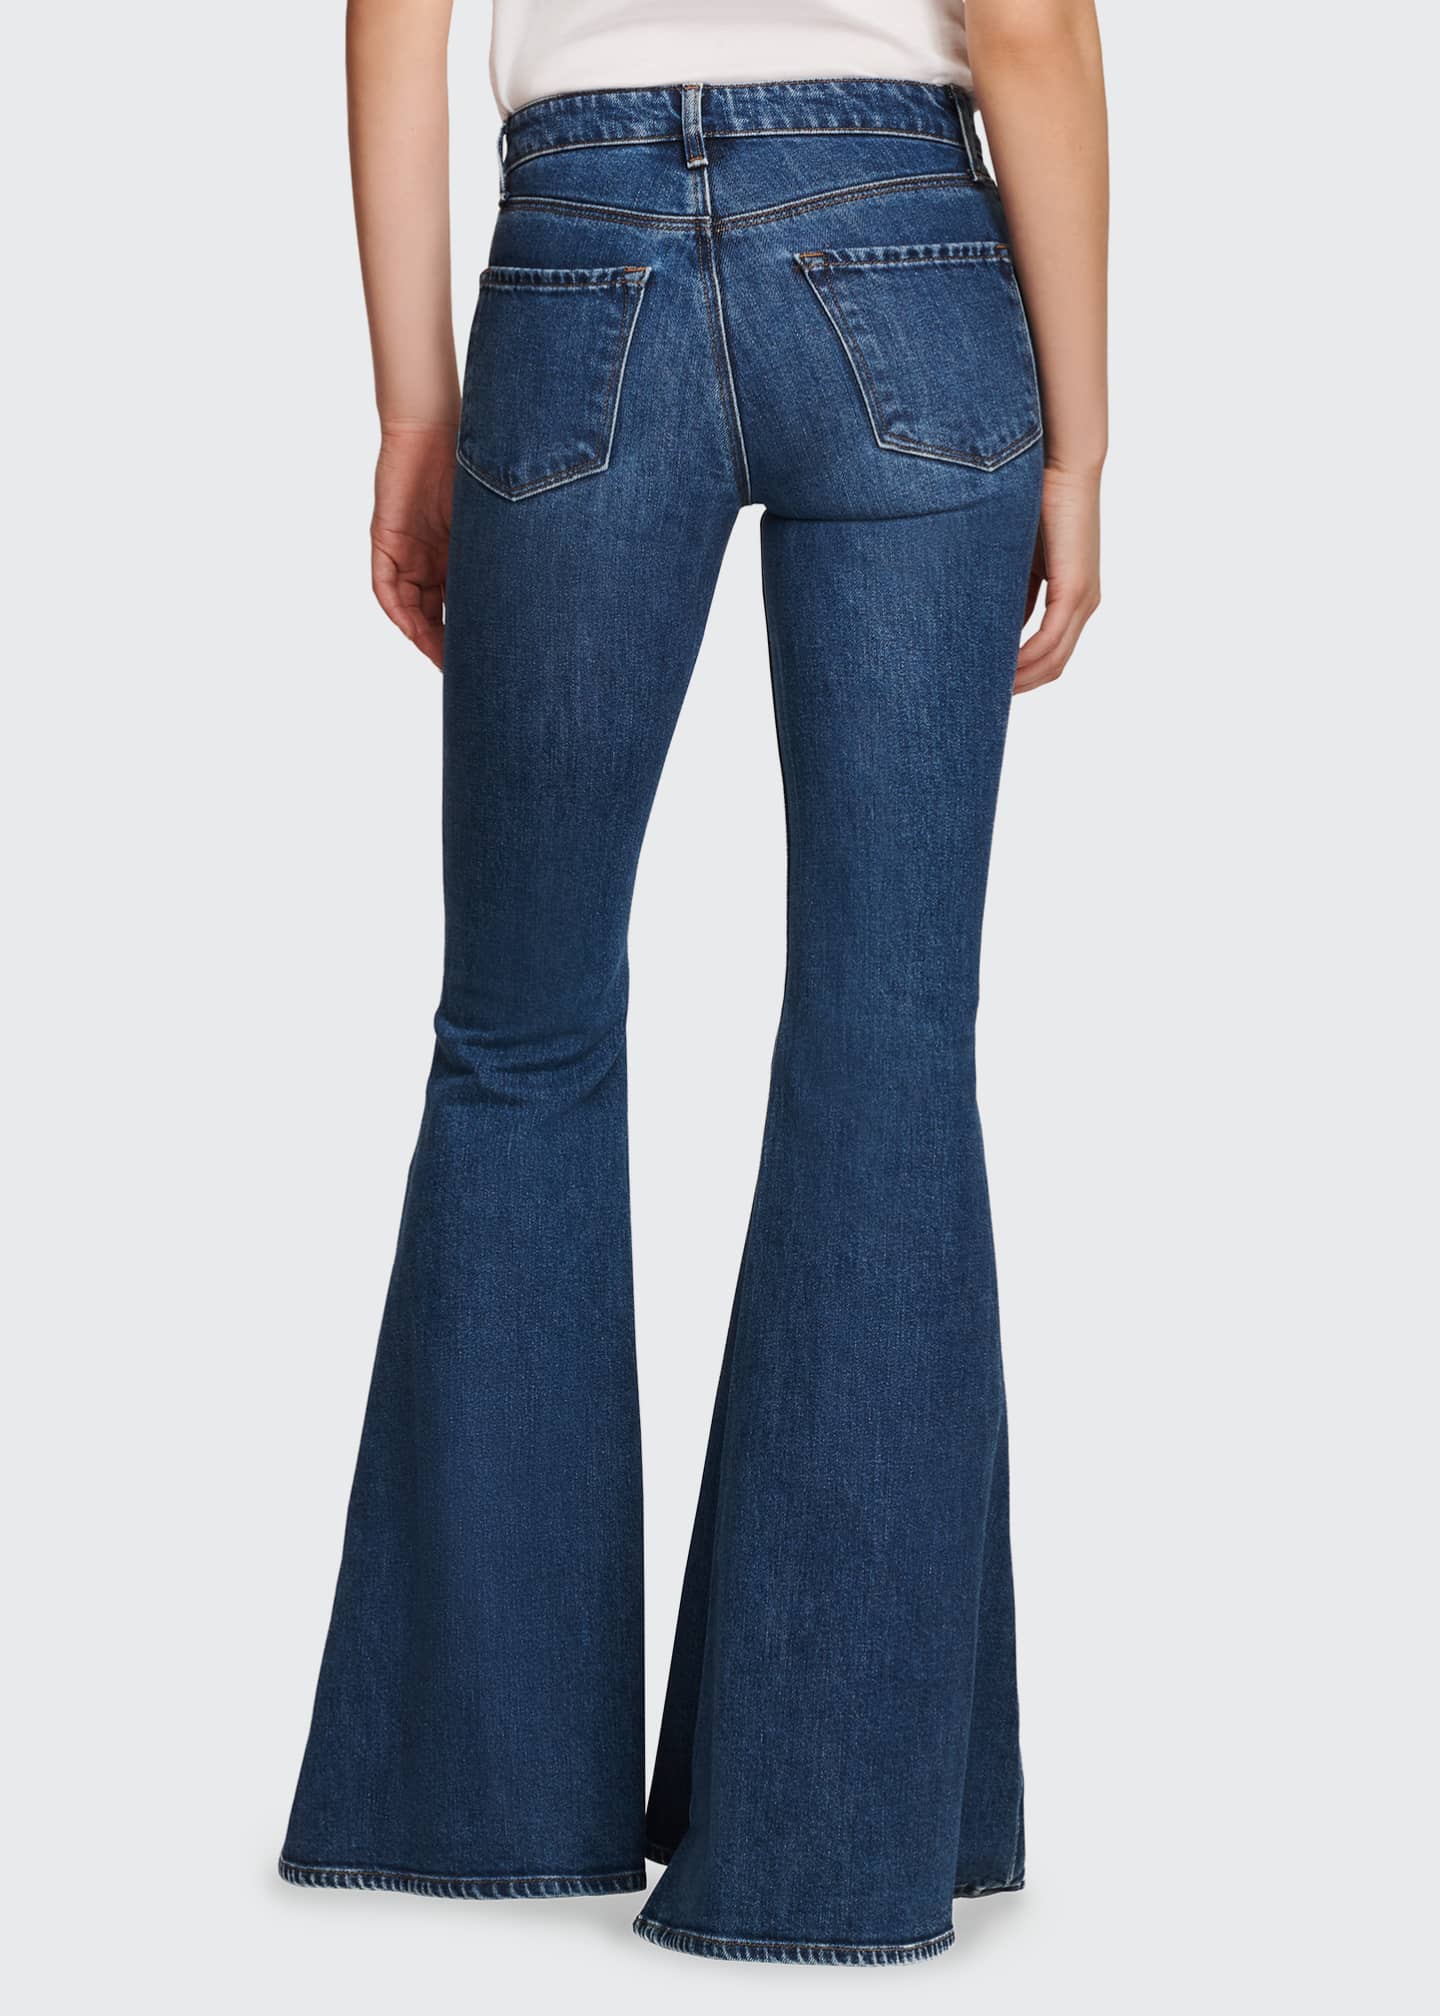 J Brand Valentina Super-Wide Jeans - Bergdorf Goodman